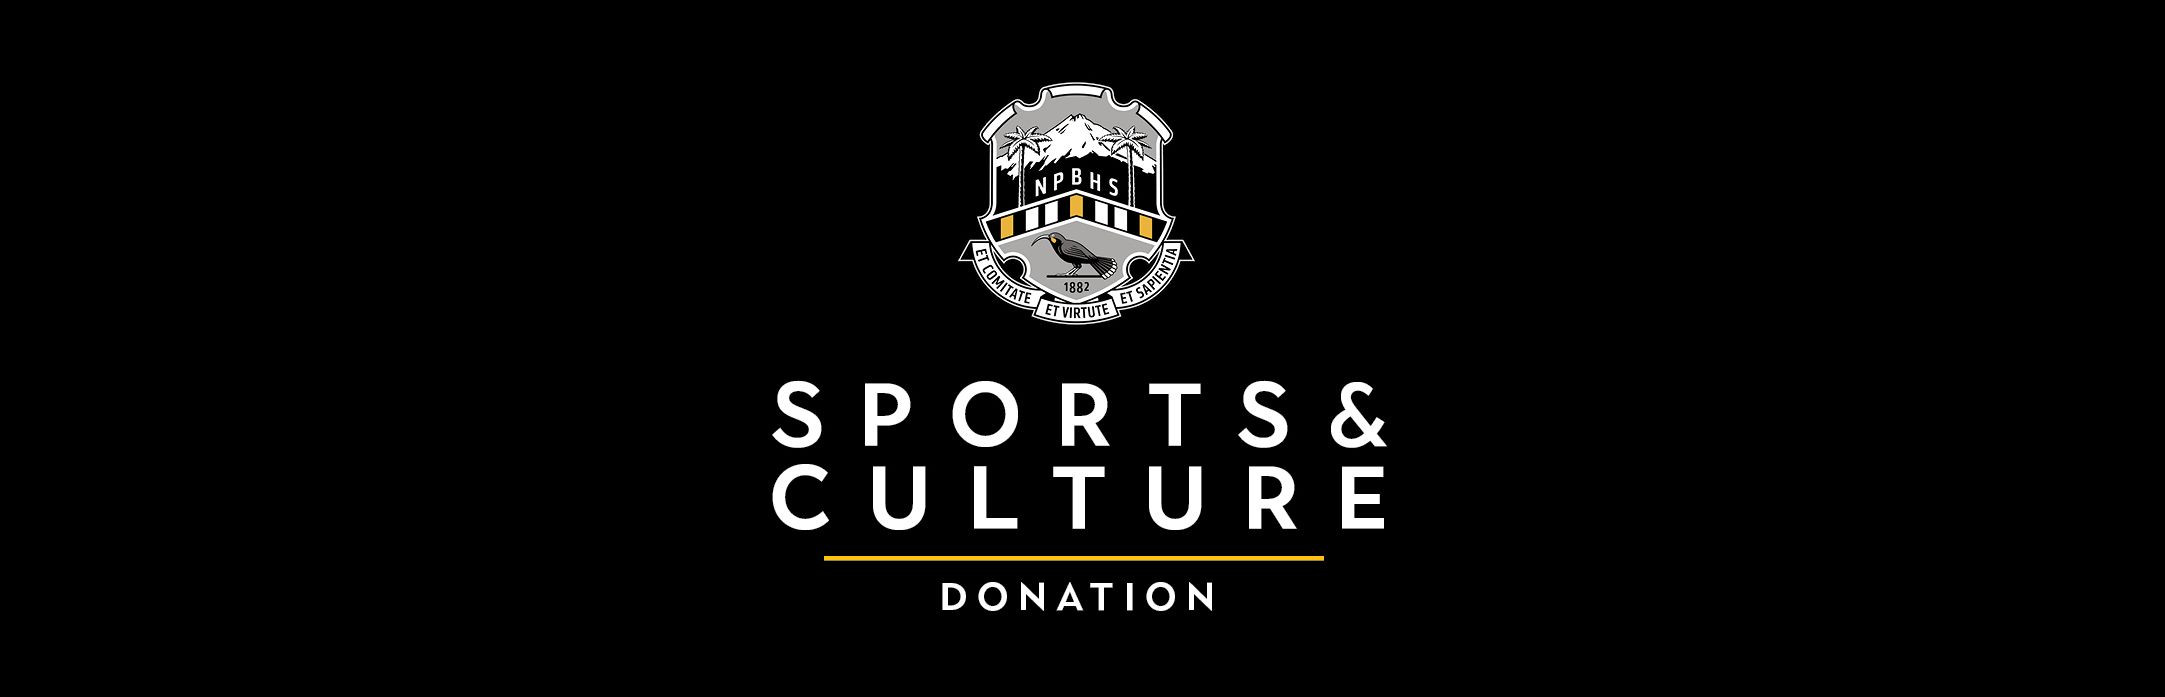 Sports & Culture Donation Logo